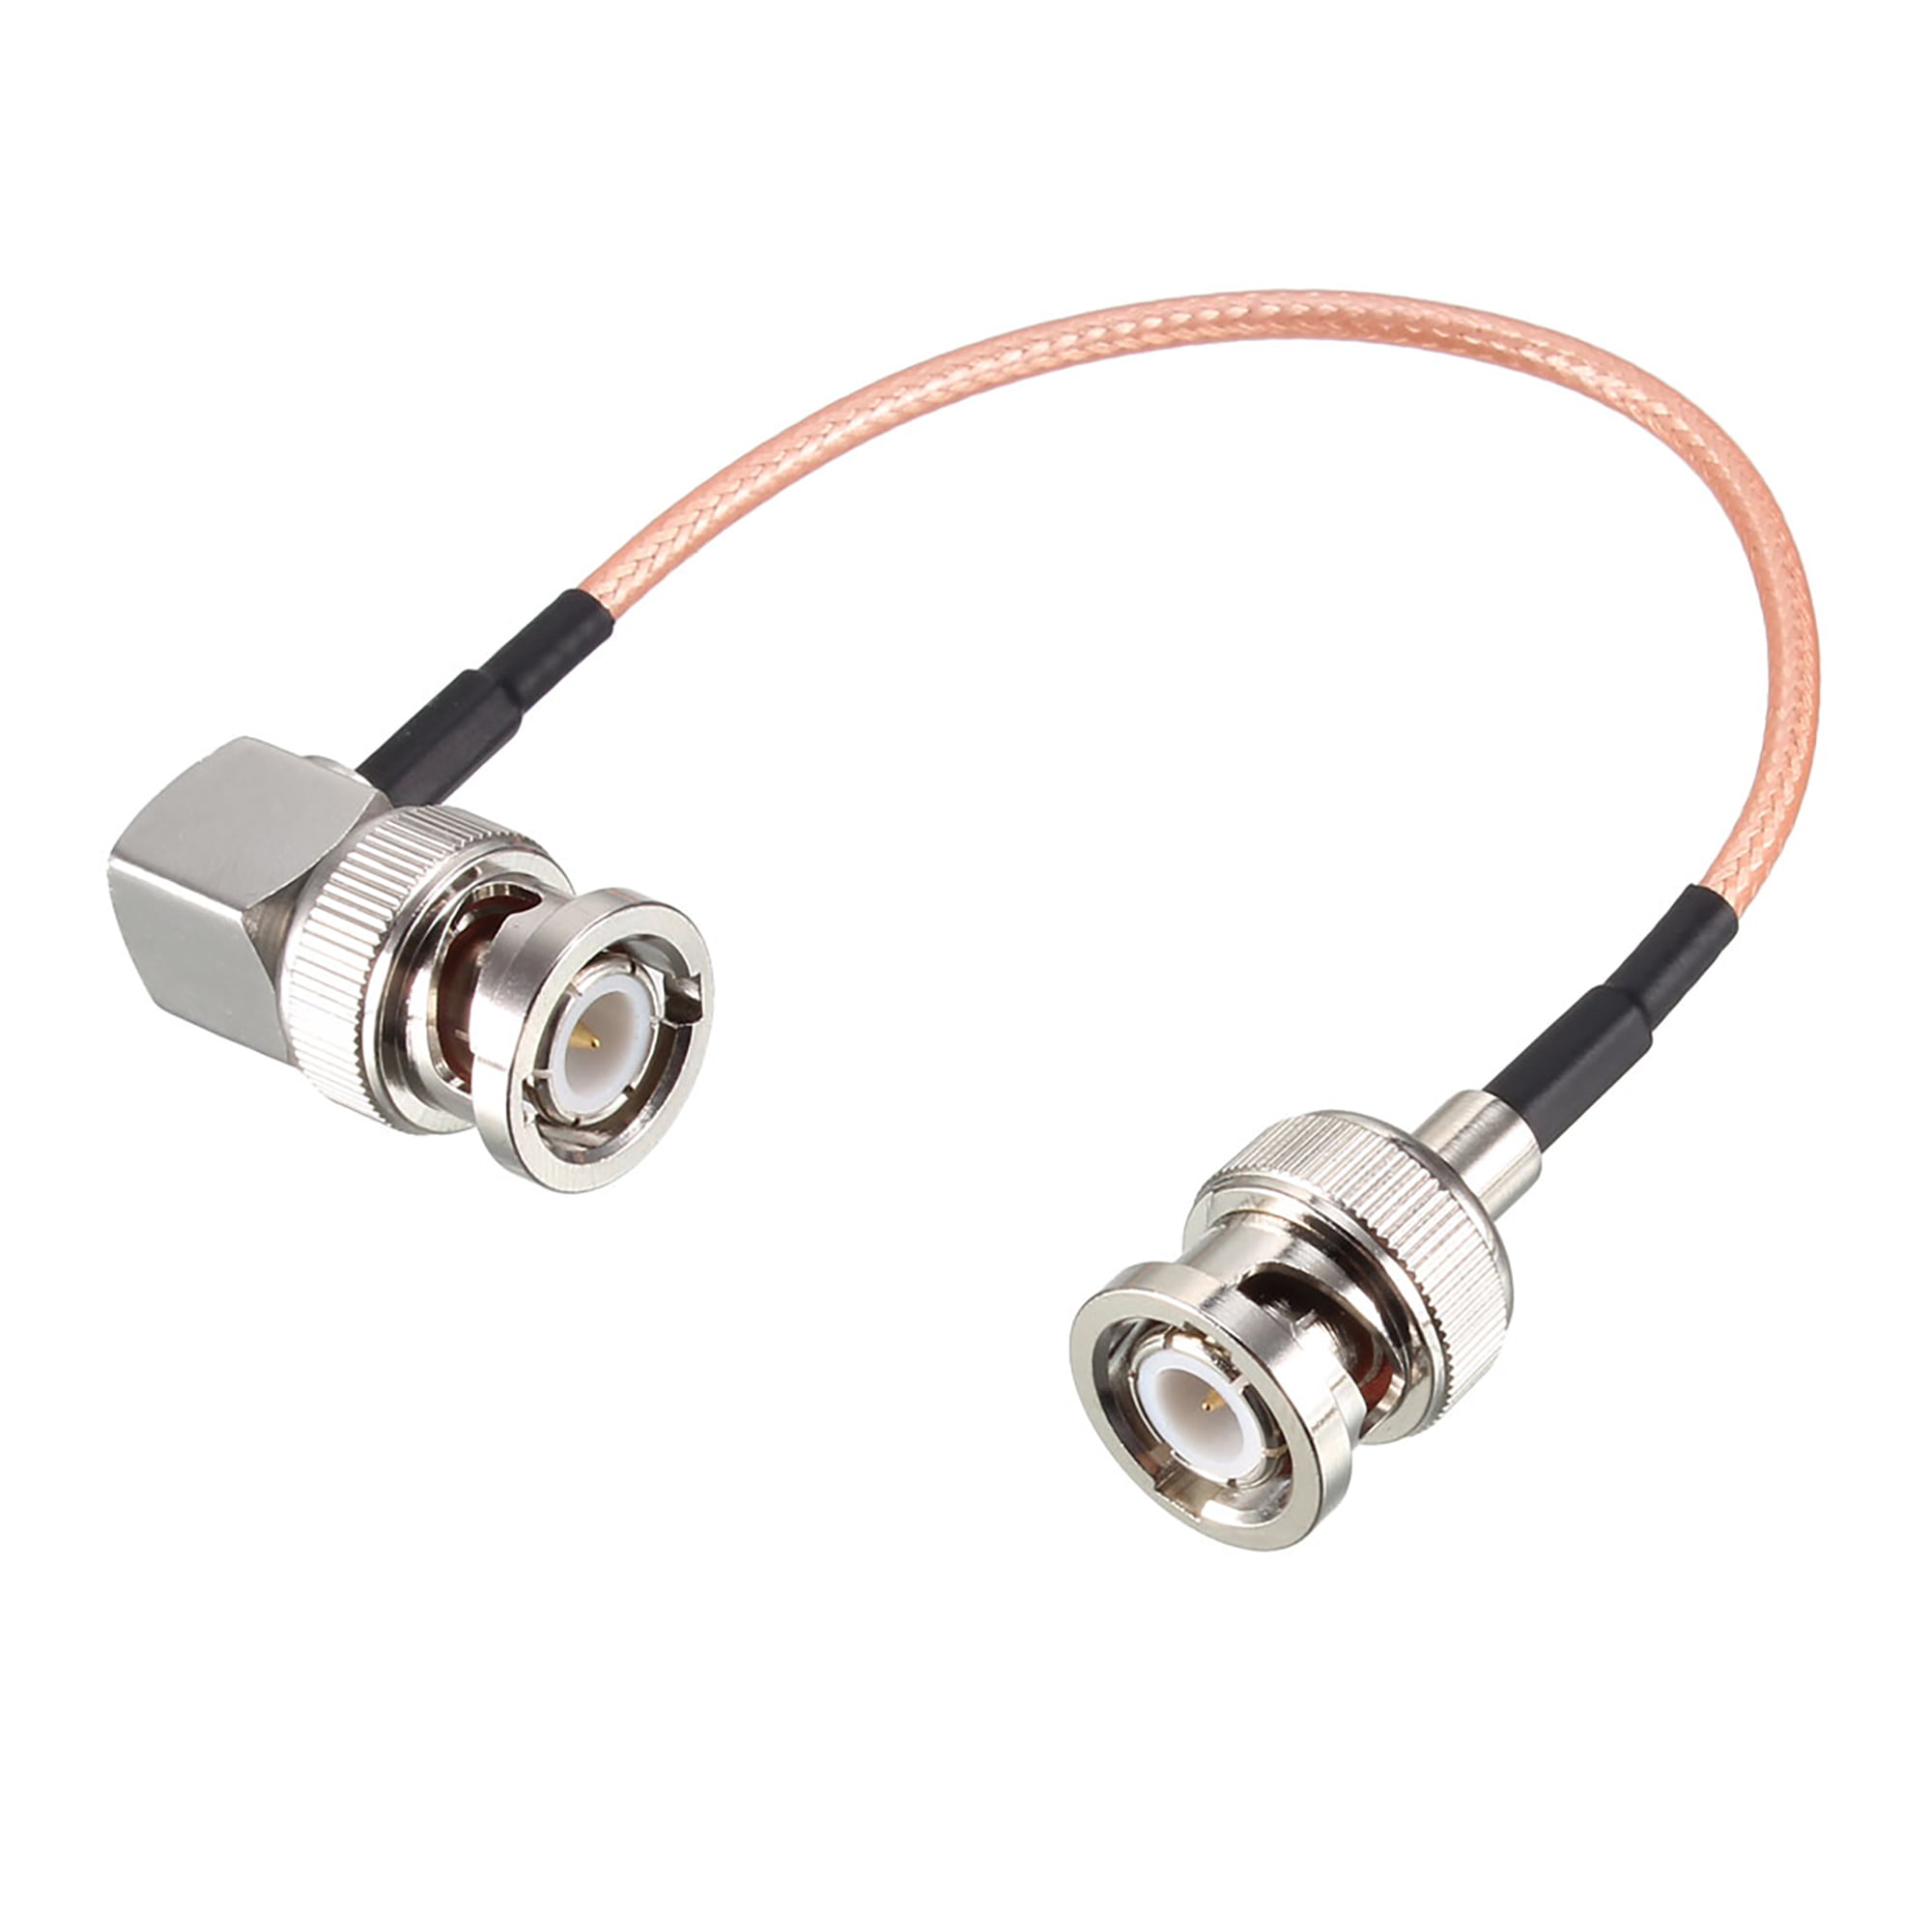 RG316 6inch RF pigtail BNC male plug pin to RP*SMA female bulkhead Cable